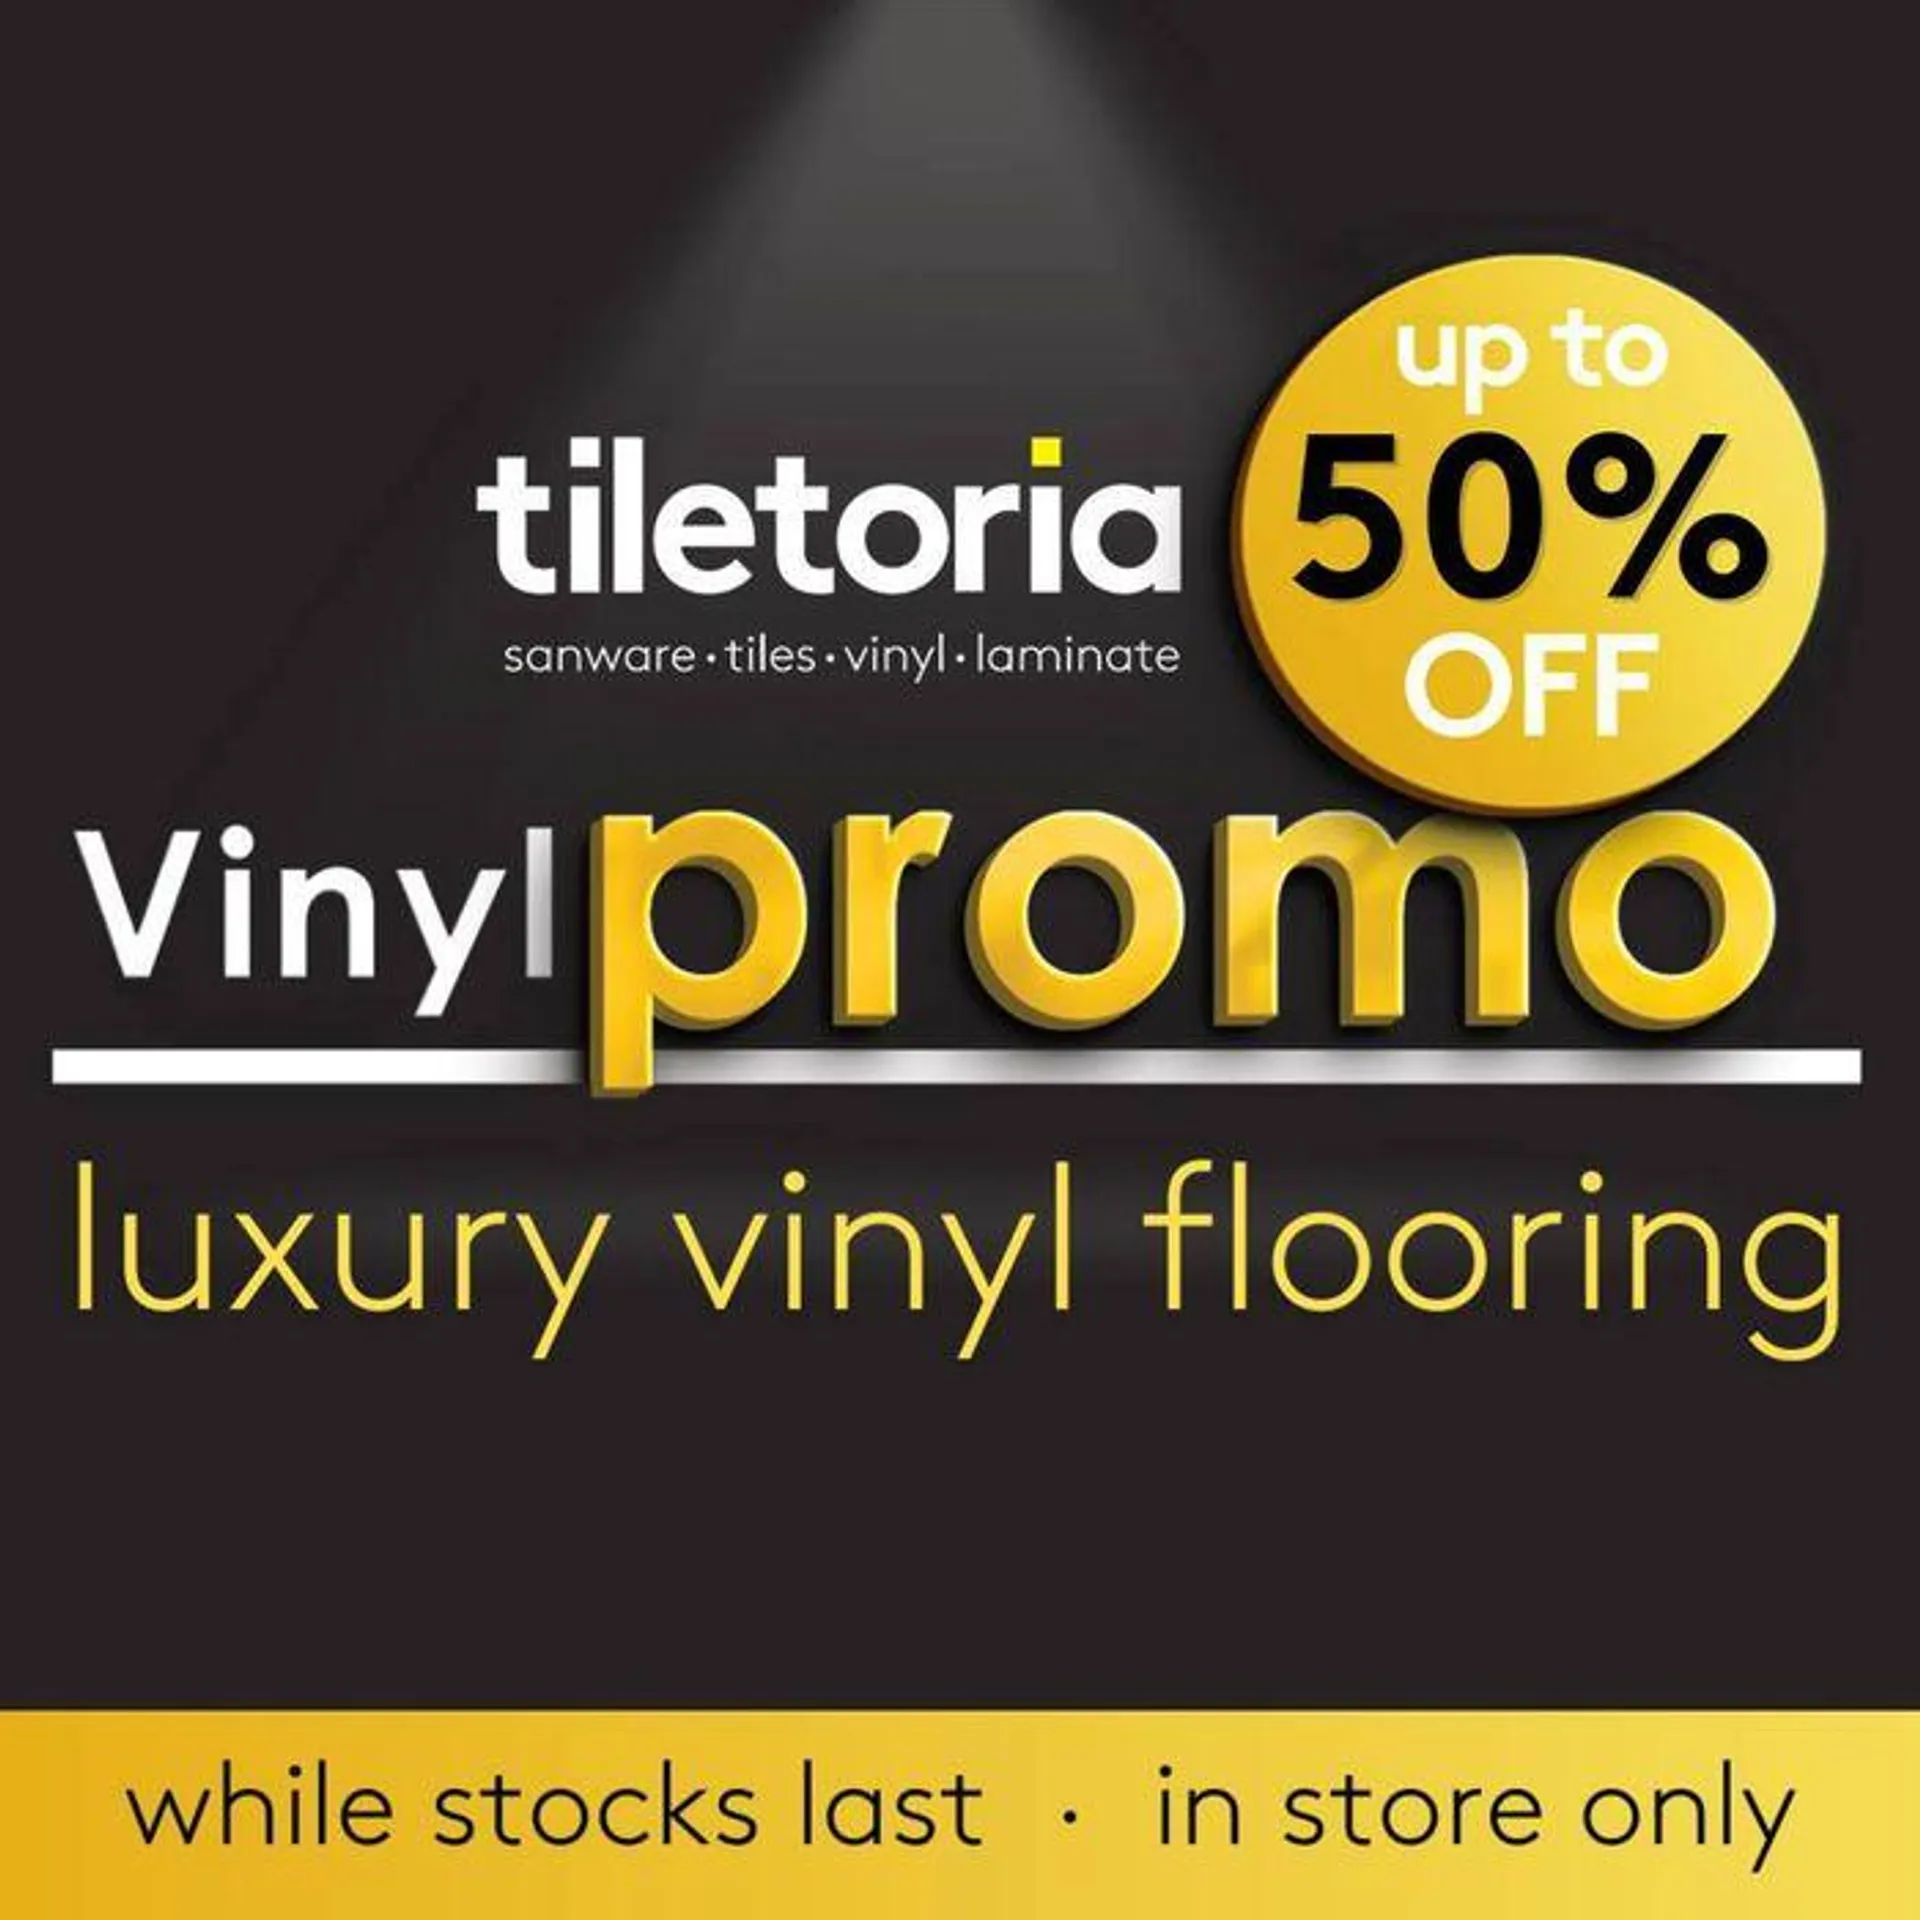 Up to 50% OFF luxury vinyl flooring!  - 1